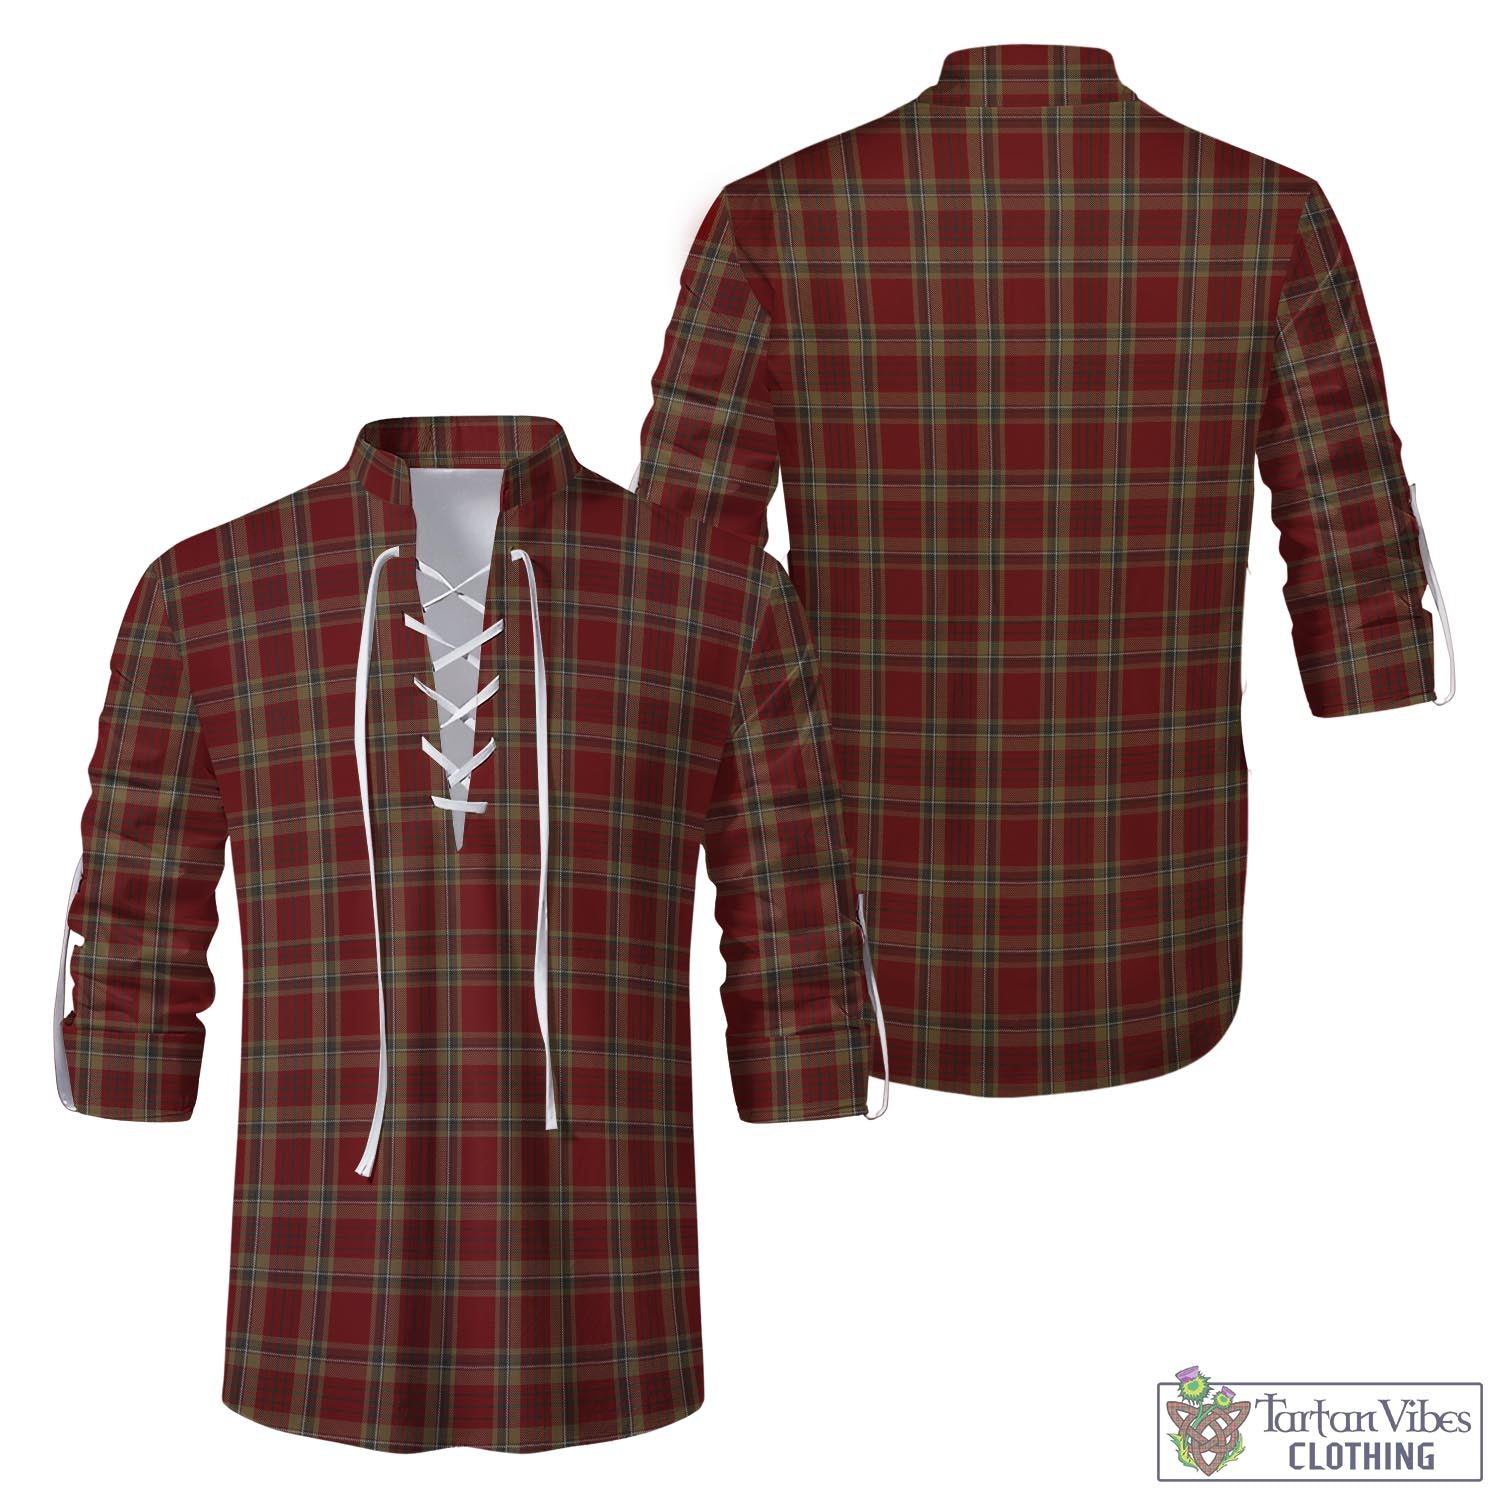 Tartan Vibes Clothing Tyrone County Ireland Tartan Men's Scottish Traditional Jacobite Ghillie Kilt Shirt